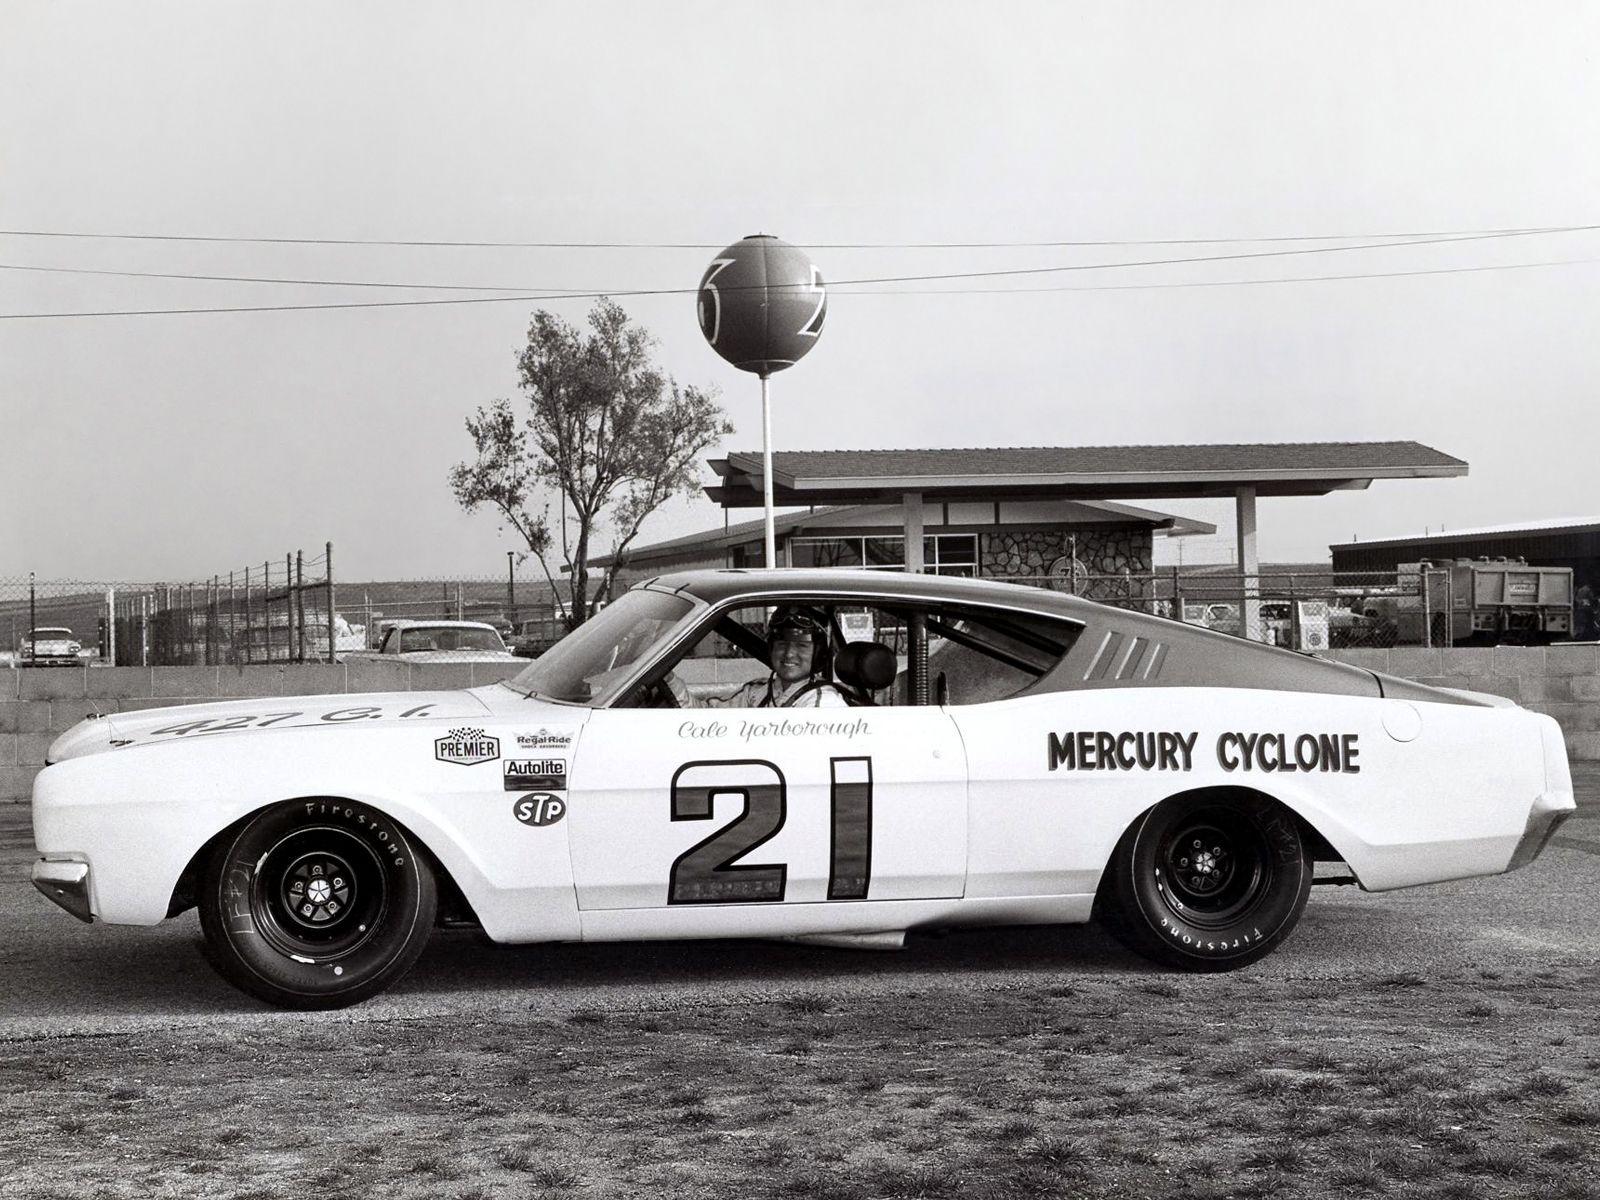 Mercury Cyclone Daytona 500 Race Car '1968 Wallpaper and Background